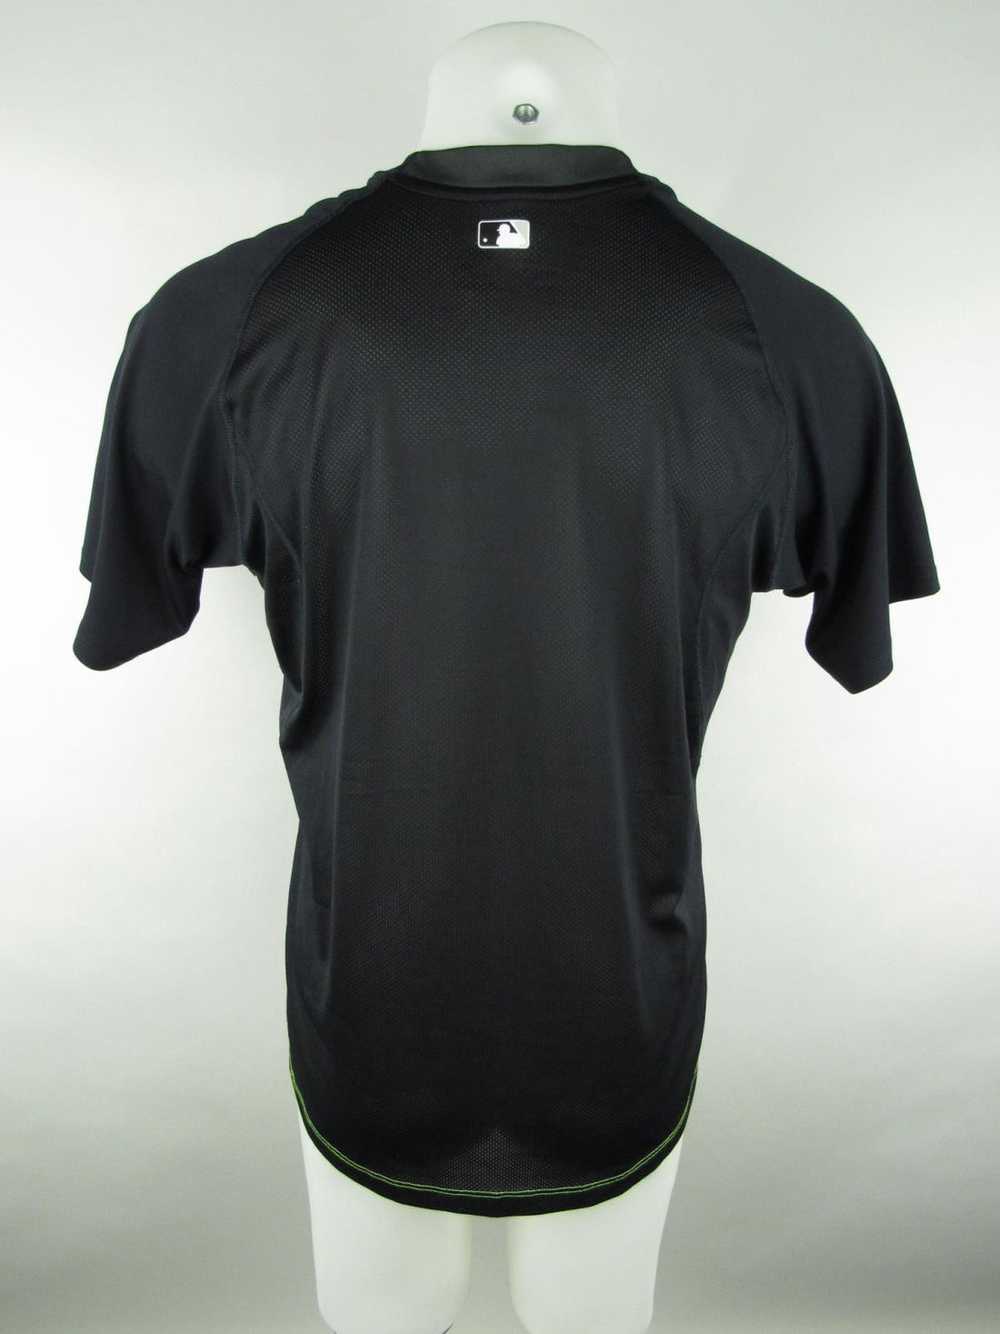 Nike Pro Cool Shortsleeve Training Men's T-Shirt Carbon Heather/Black  703094-091